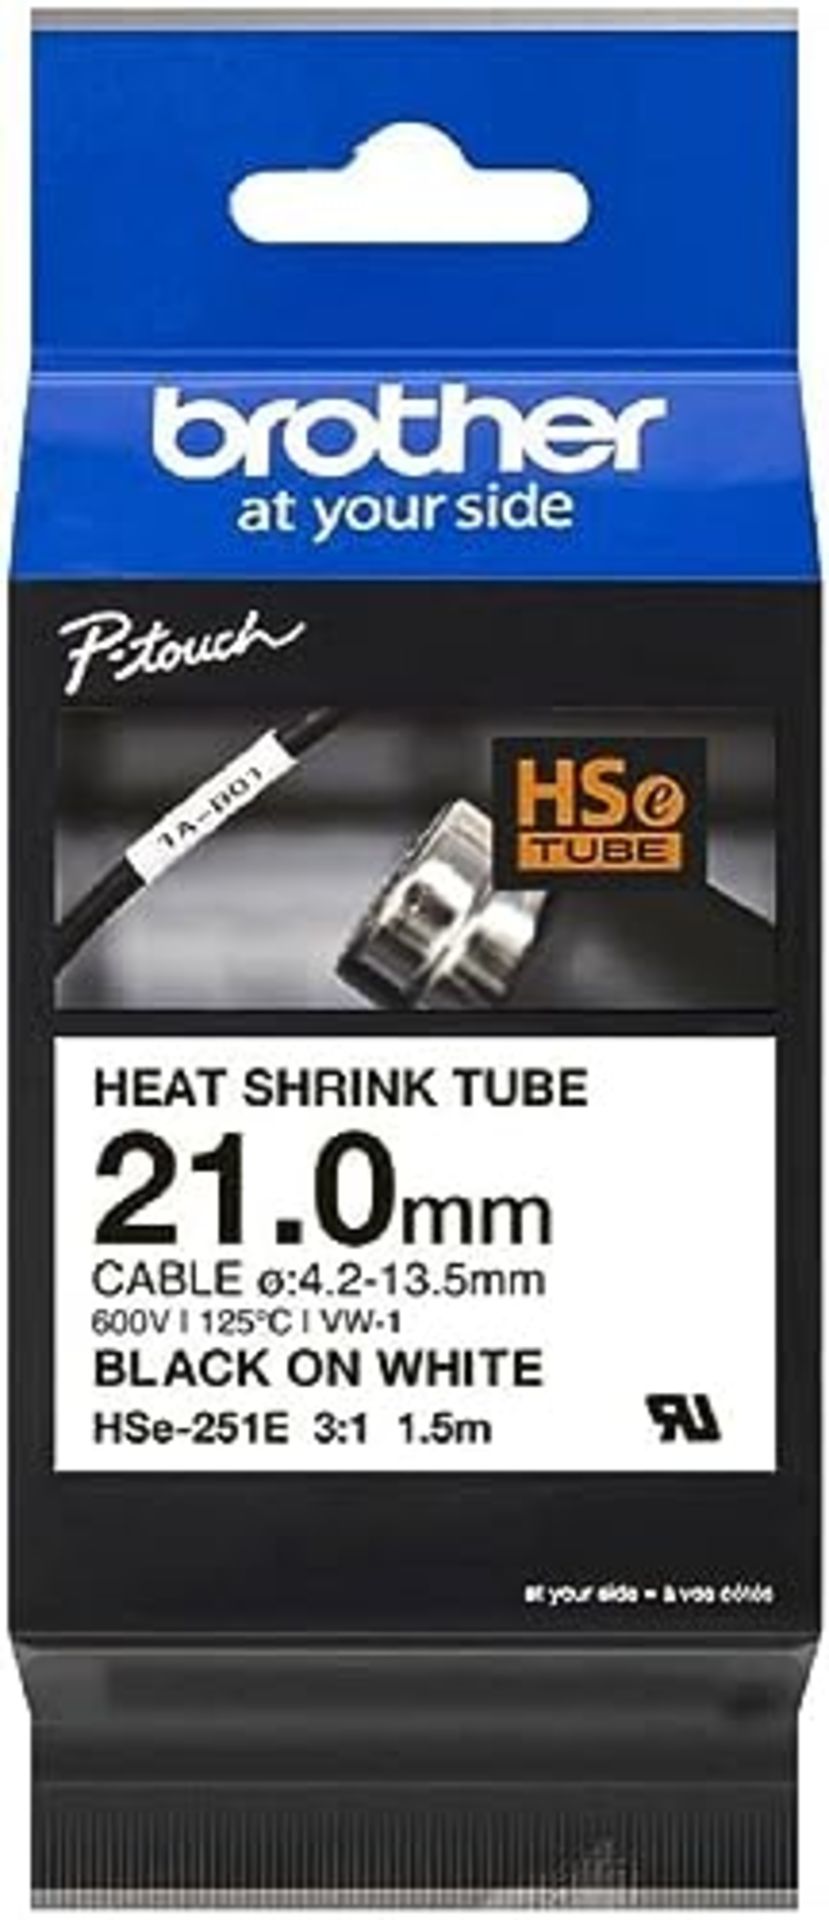 Brother Original Pro Tape HSe-251E Heat Shrink Tubing - black on white